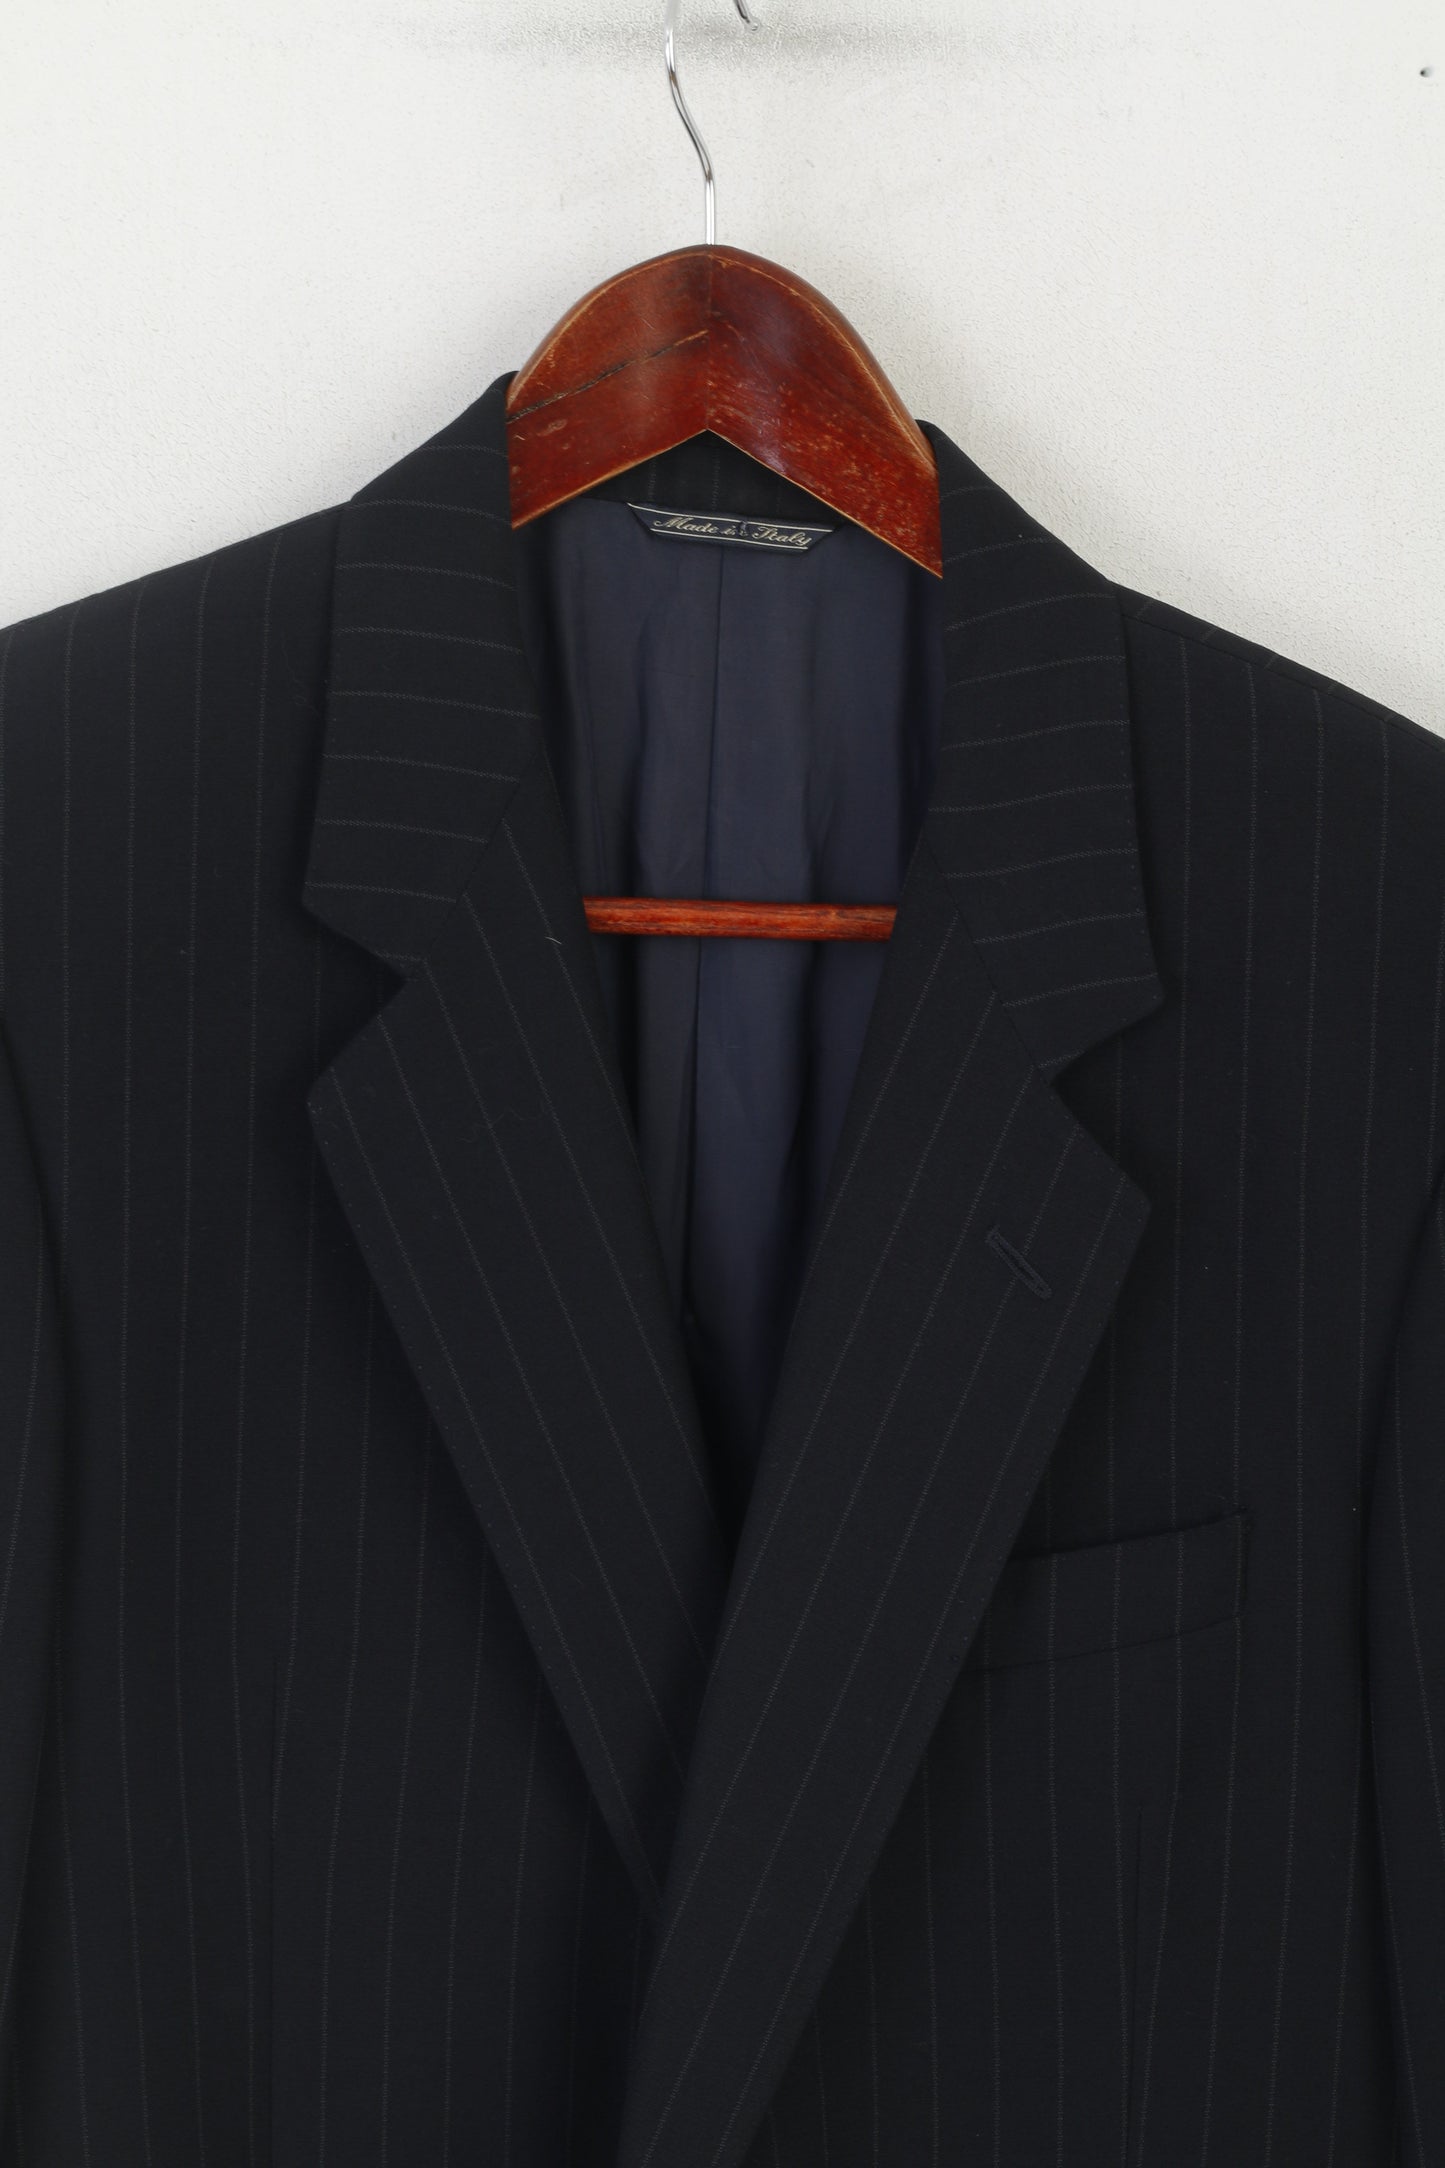 Nino Danieli Men 50 40 Blazer Navy Striped Wool Made in Italy Single Breasted Jacket